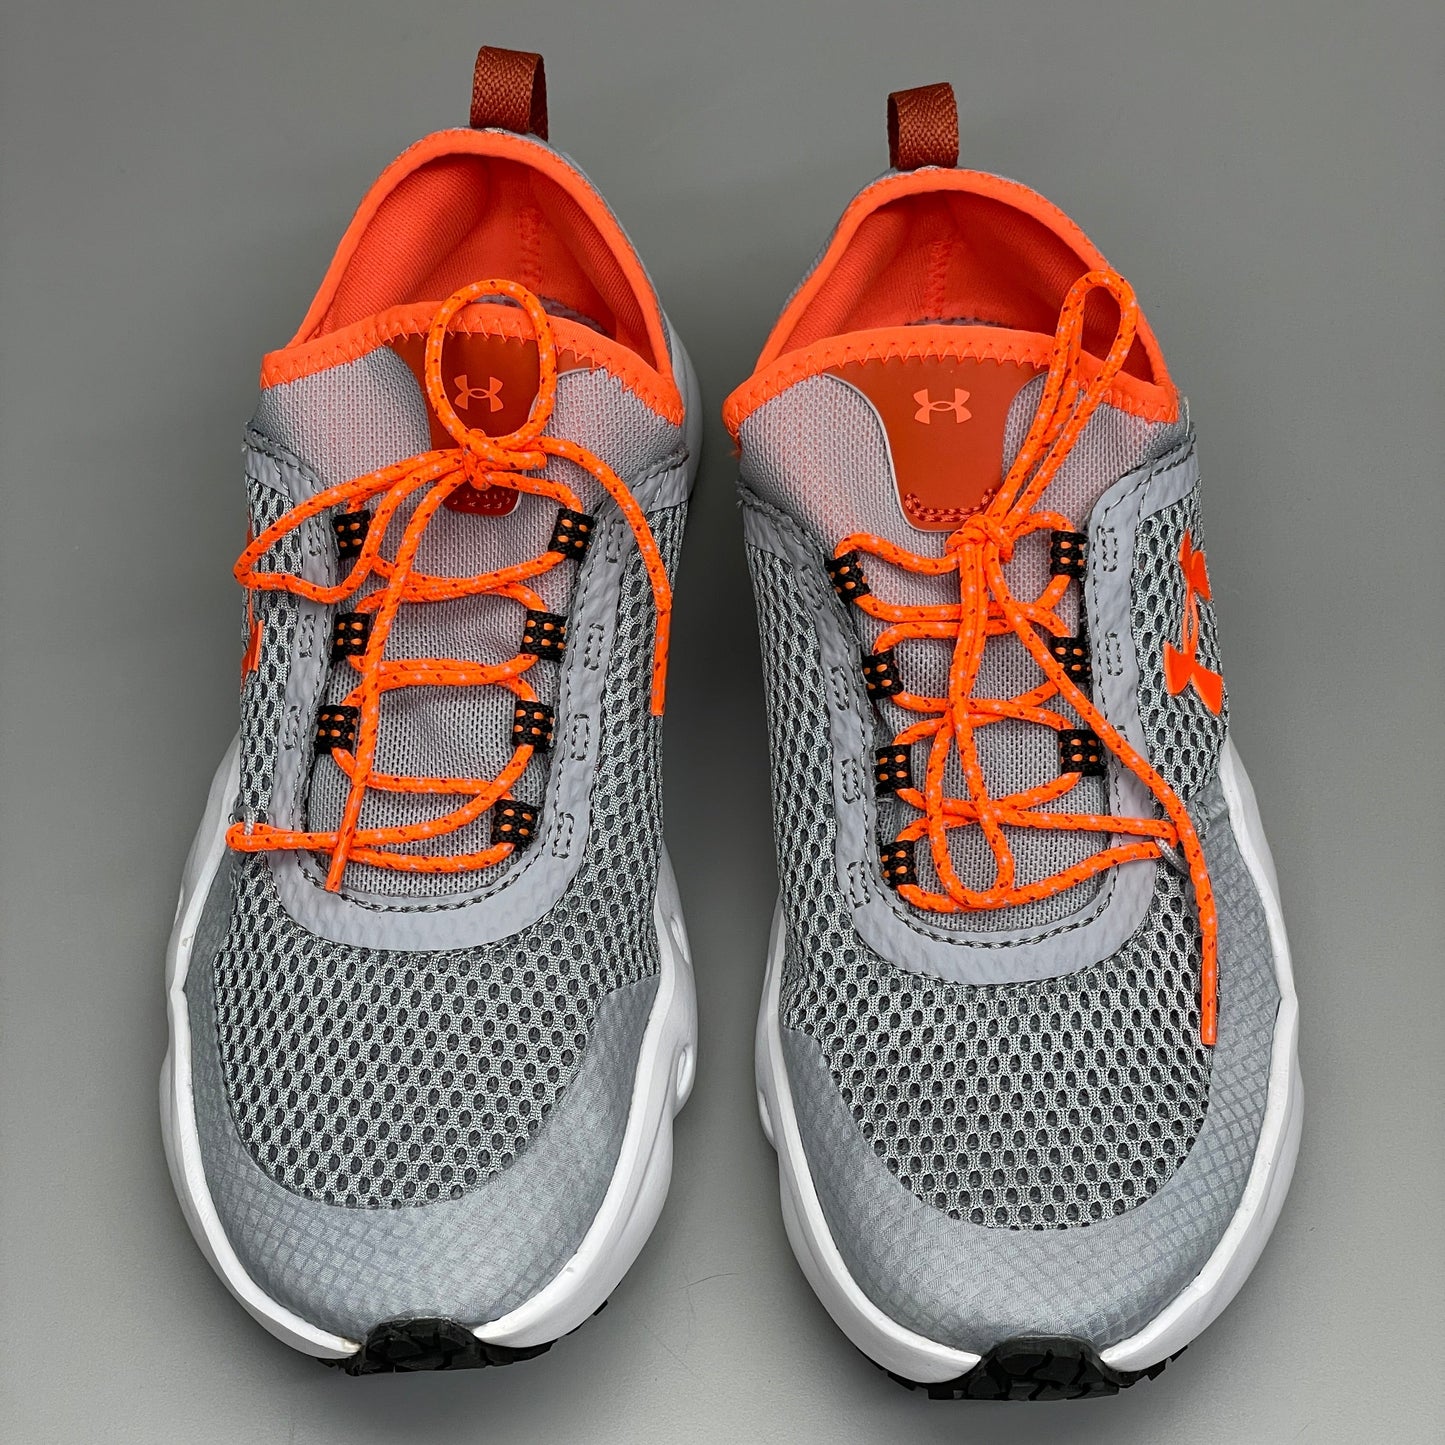 ZA@ UNDER ARMOUR Micro G Kilchis Running Sneaker Men's Sz 11 Grey/Neon Orange/White 3023739-103(New) A